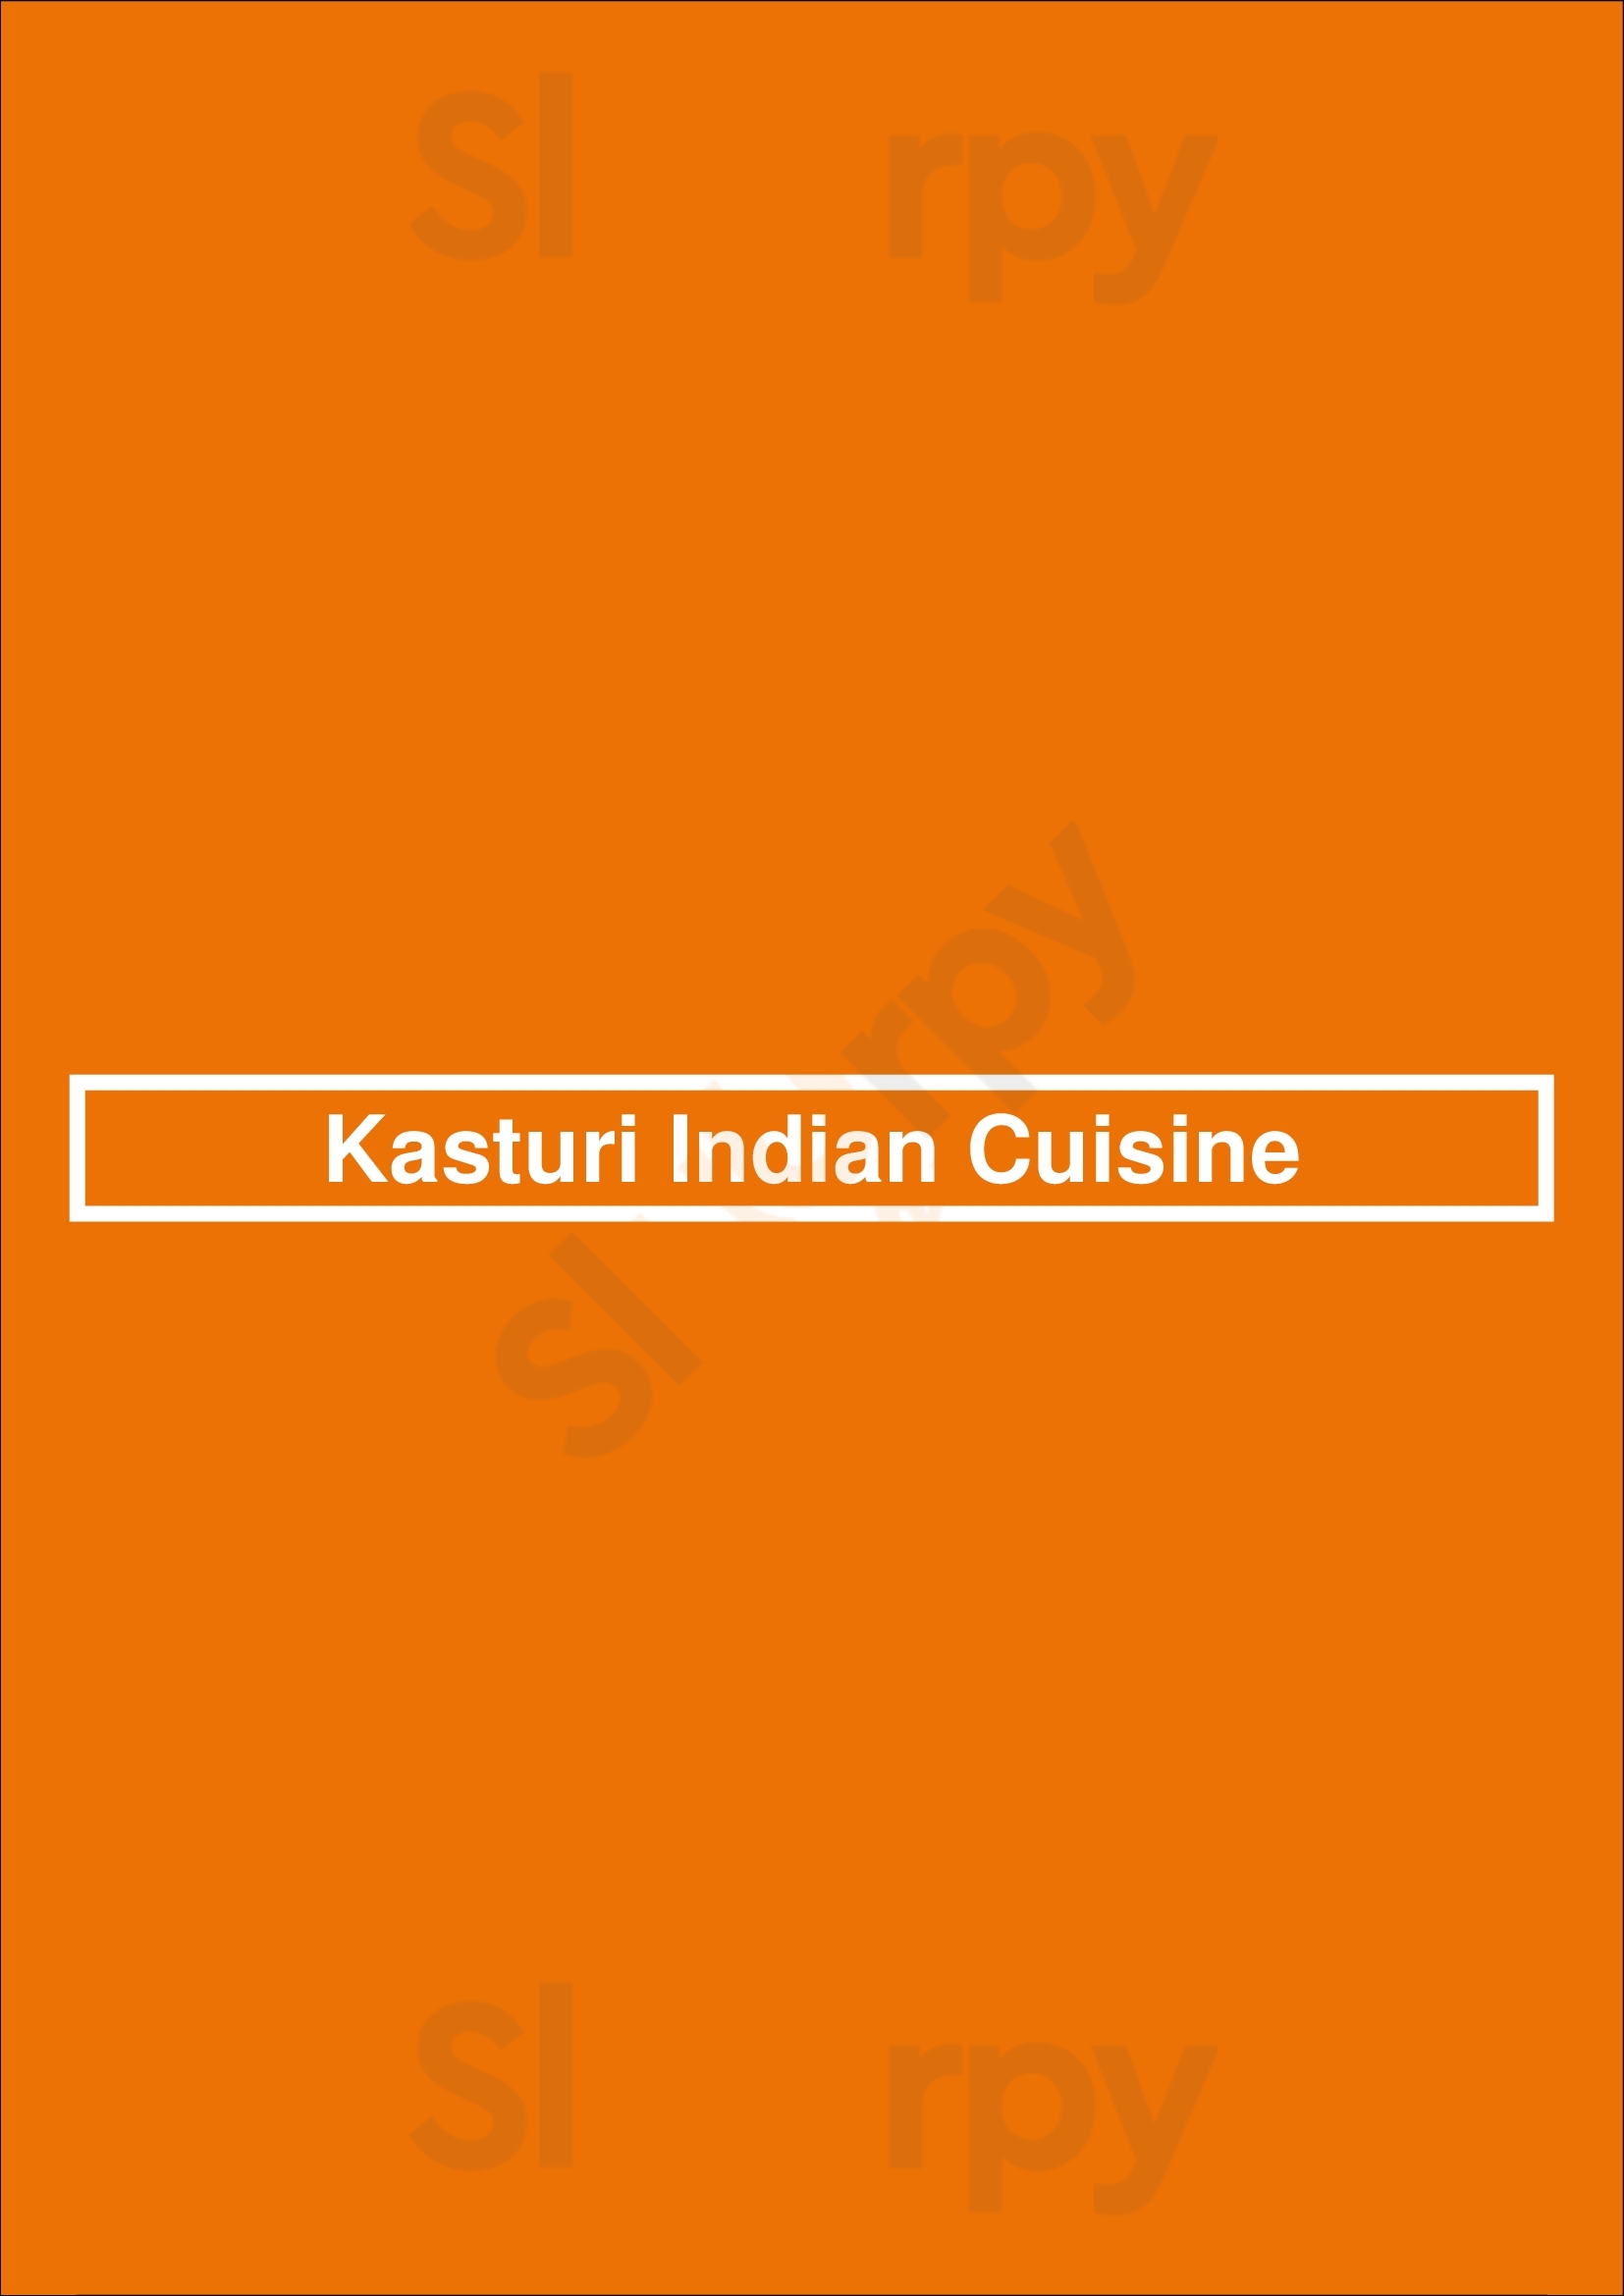 Kasturi Indian Cuisine Greenville Menu - 1